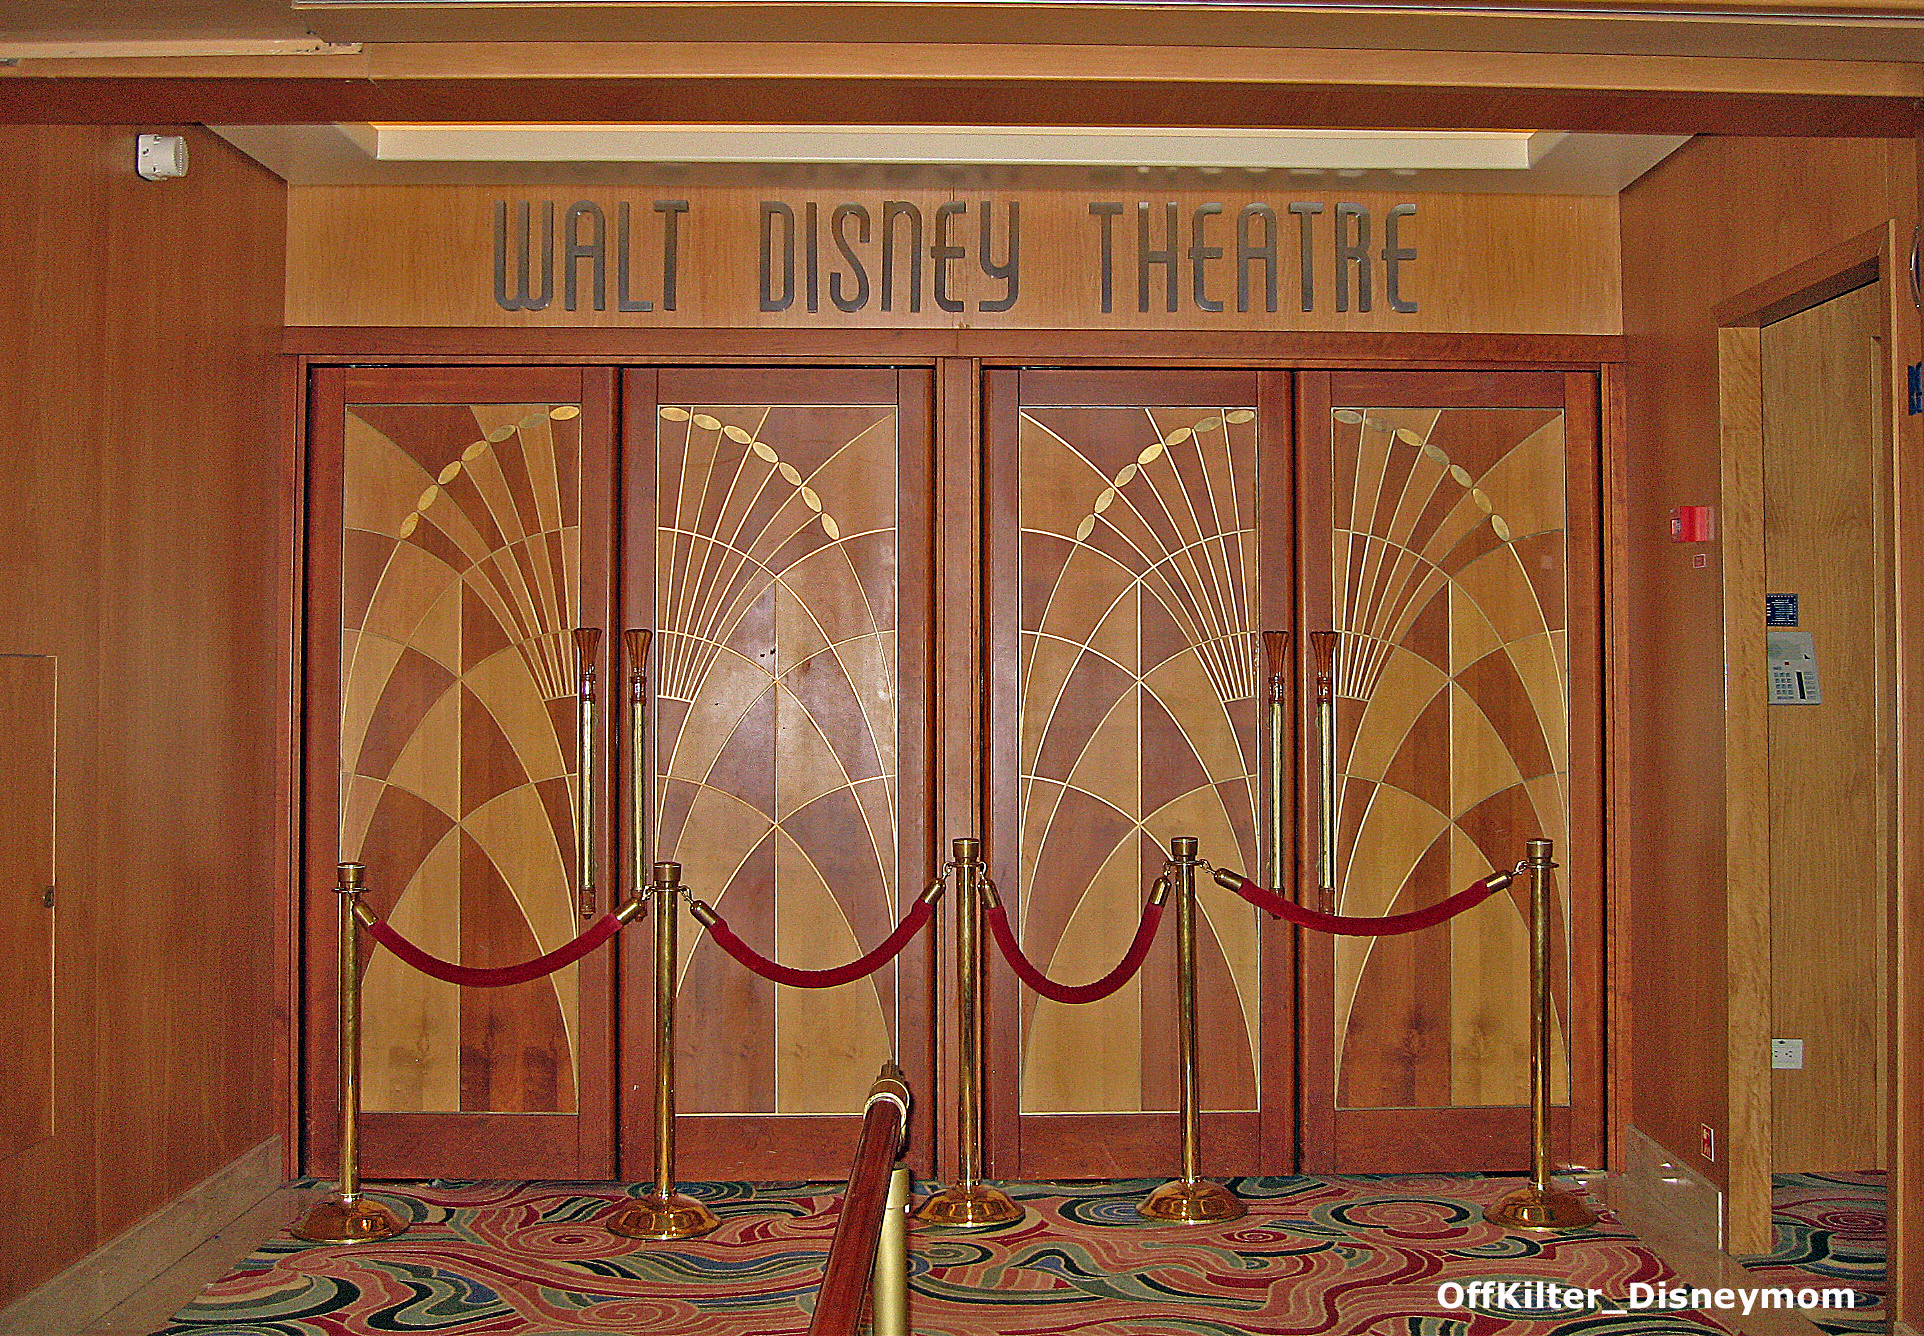 Wonder - Walt Disney Theater